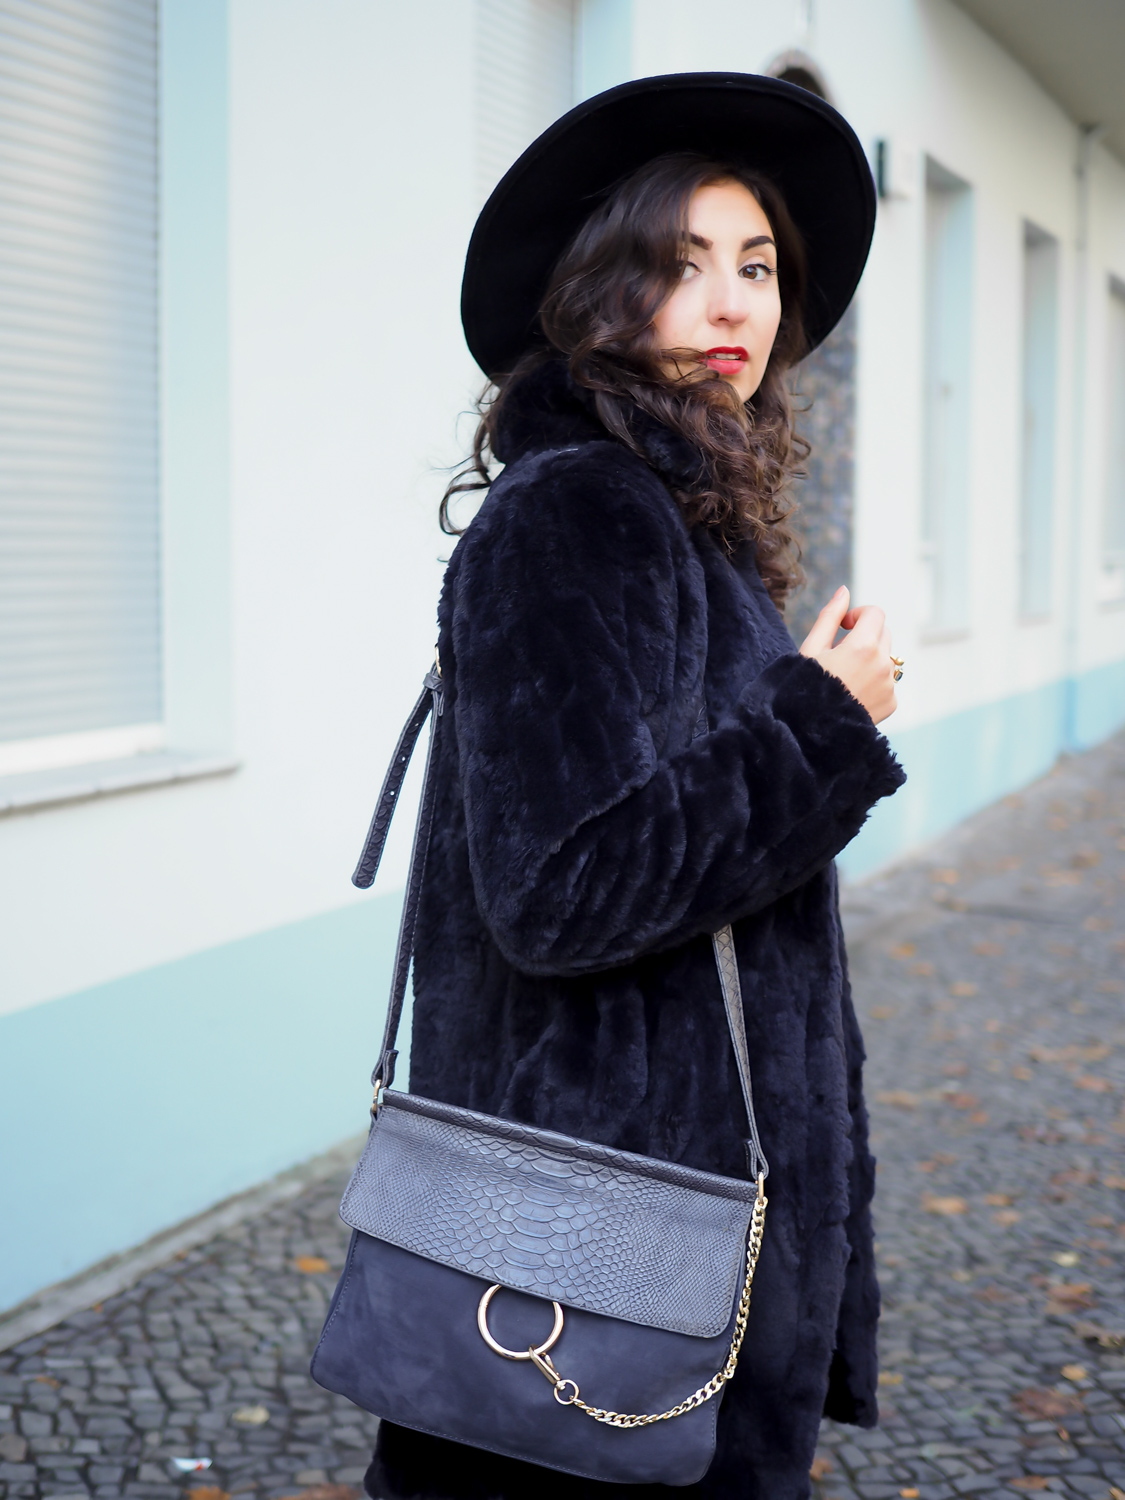 dorothy perkins black fluffy coat vintage inspired fakefur kunstfell mom jeans retro hipster look outfit fashionblogger modebloggerin berlin samieze_